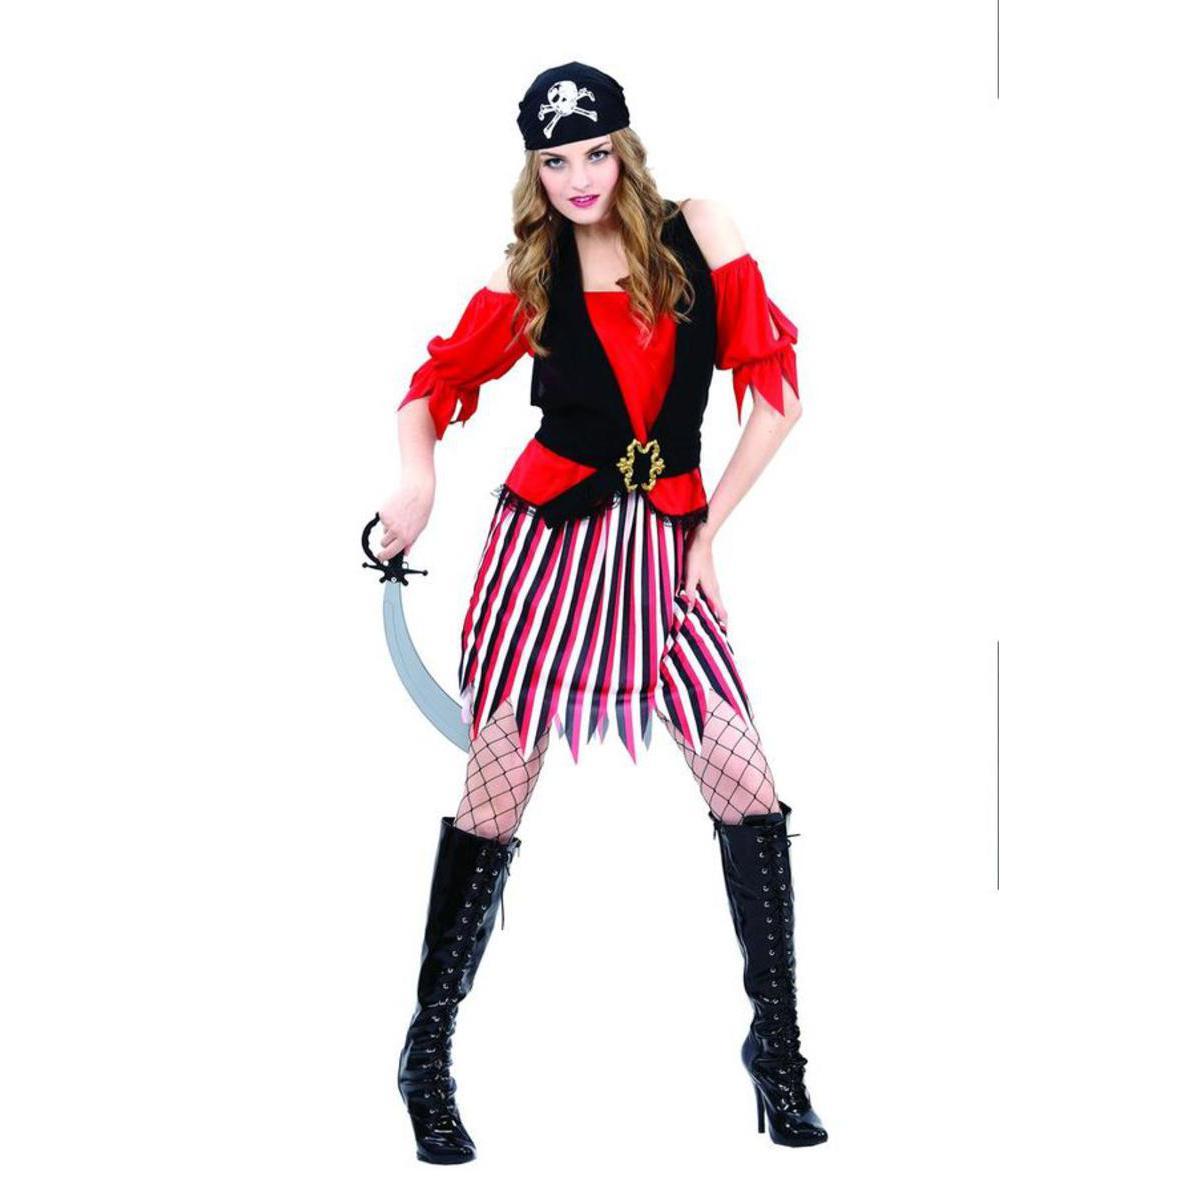 Costume adulte femme pirate en polyester - Taille unique - Multicolore